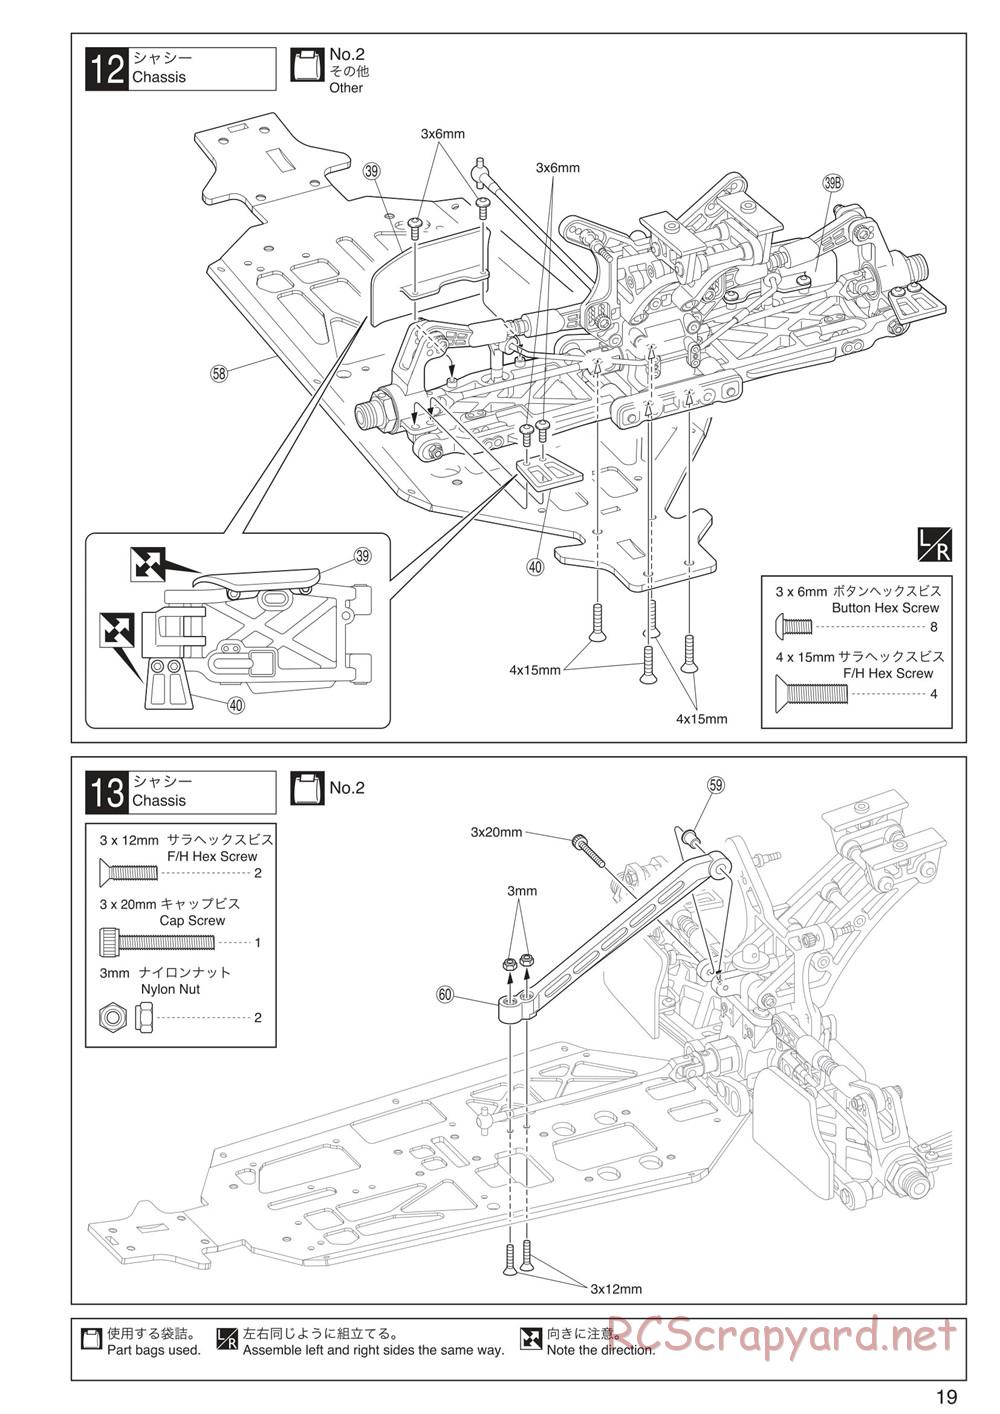 Kyosho - Inferno MP9 TKI3 - Manual - Page 19